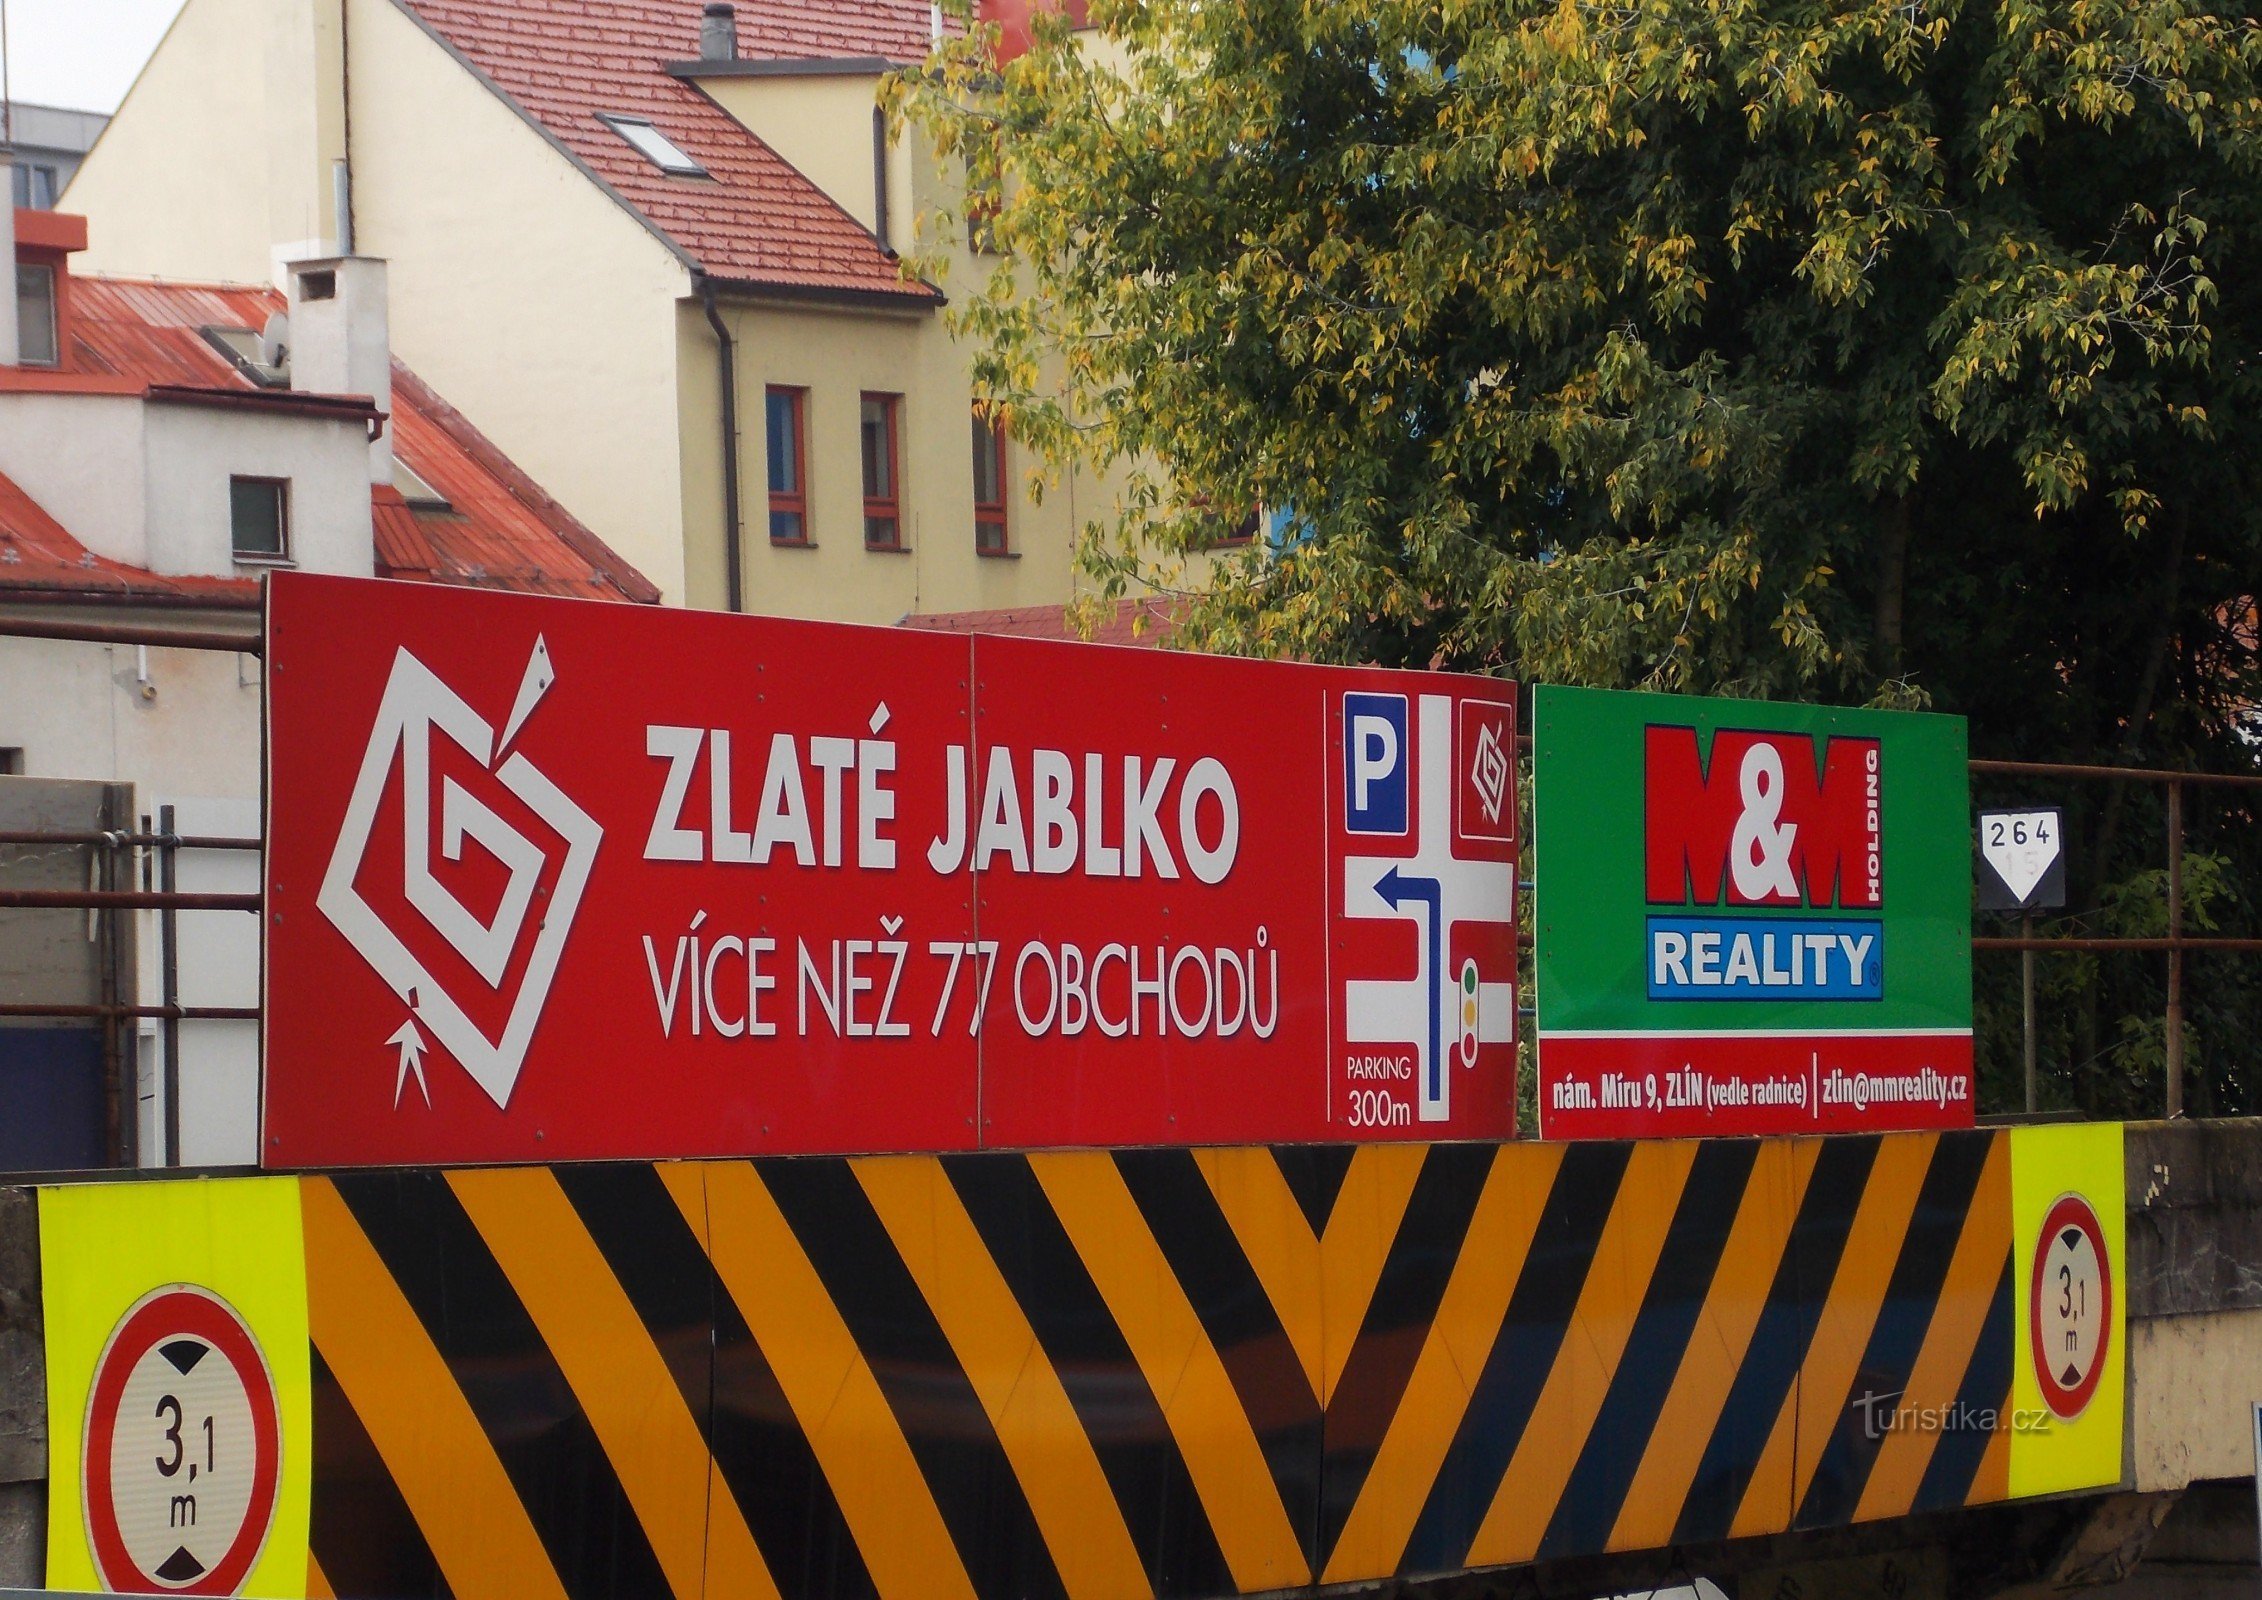 Zlínské Zlaté apple - shopping and entertainment center